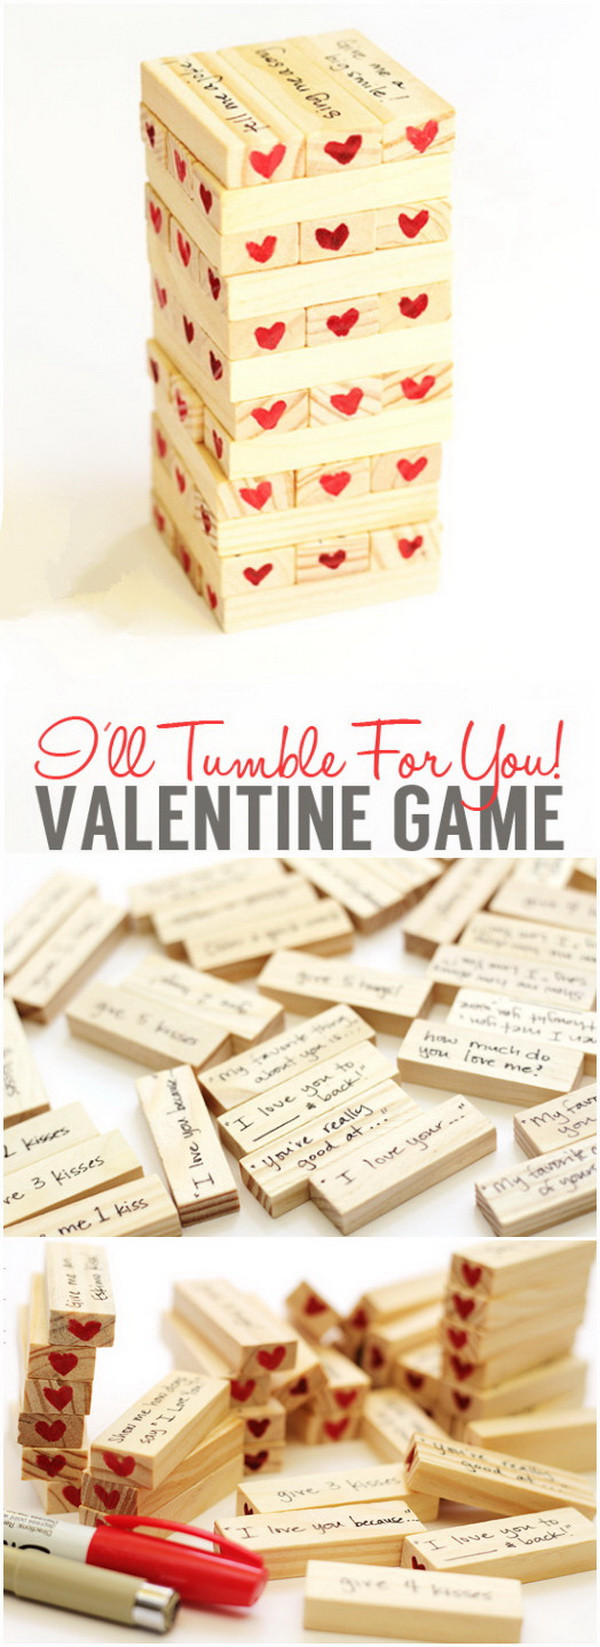 Cute Gift Ideas For Boyfriend Valentines Day
 Easy DIY Valentine s Day Gifts for Boyfriend Listing More